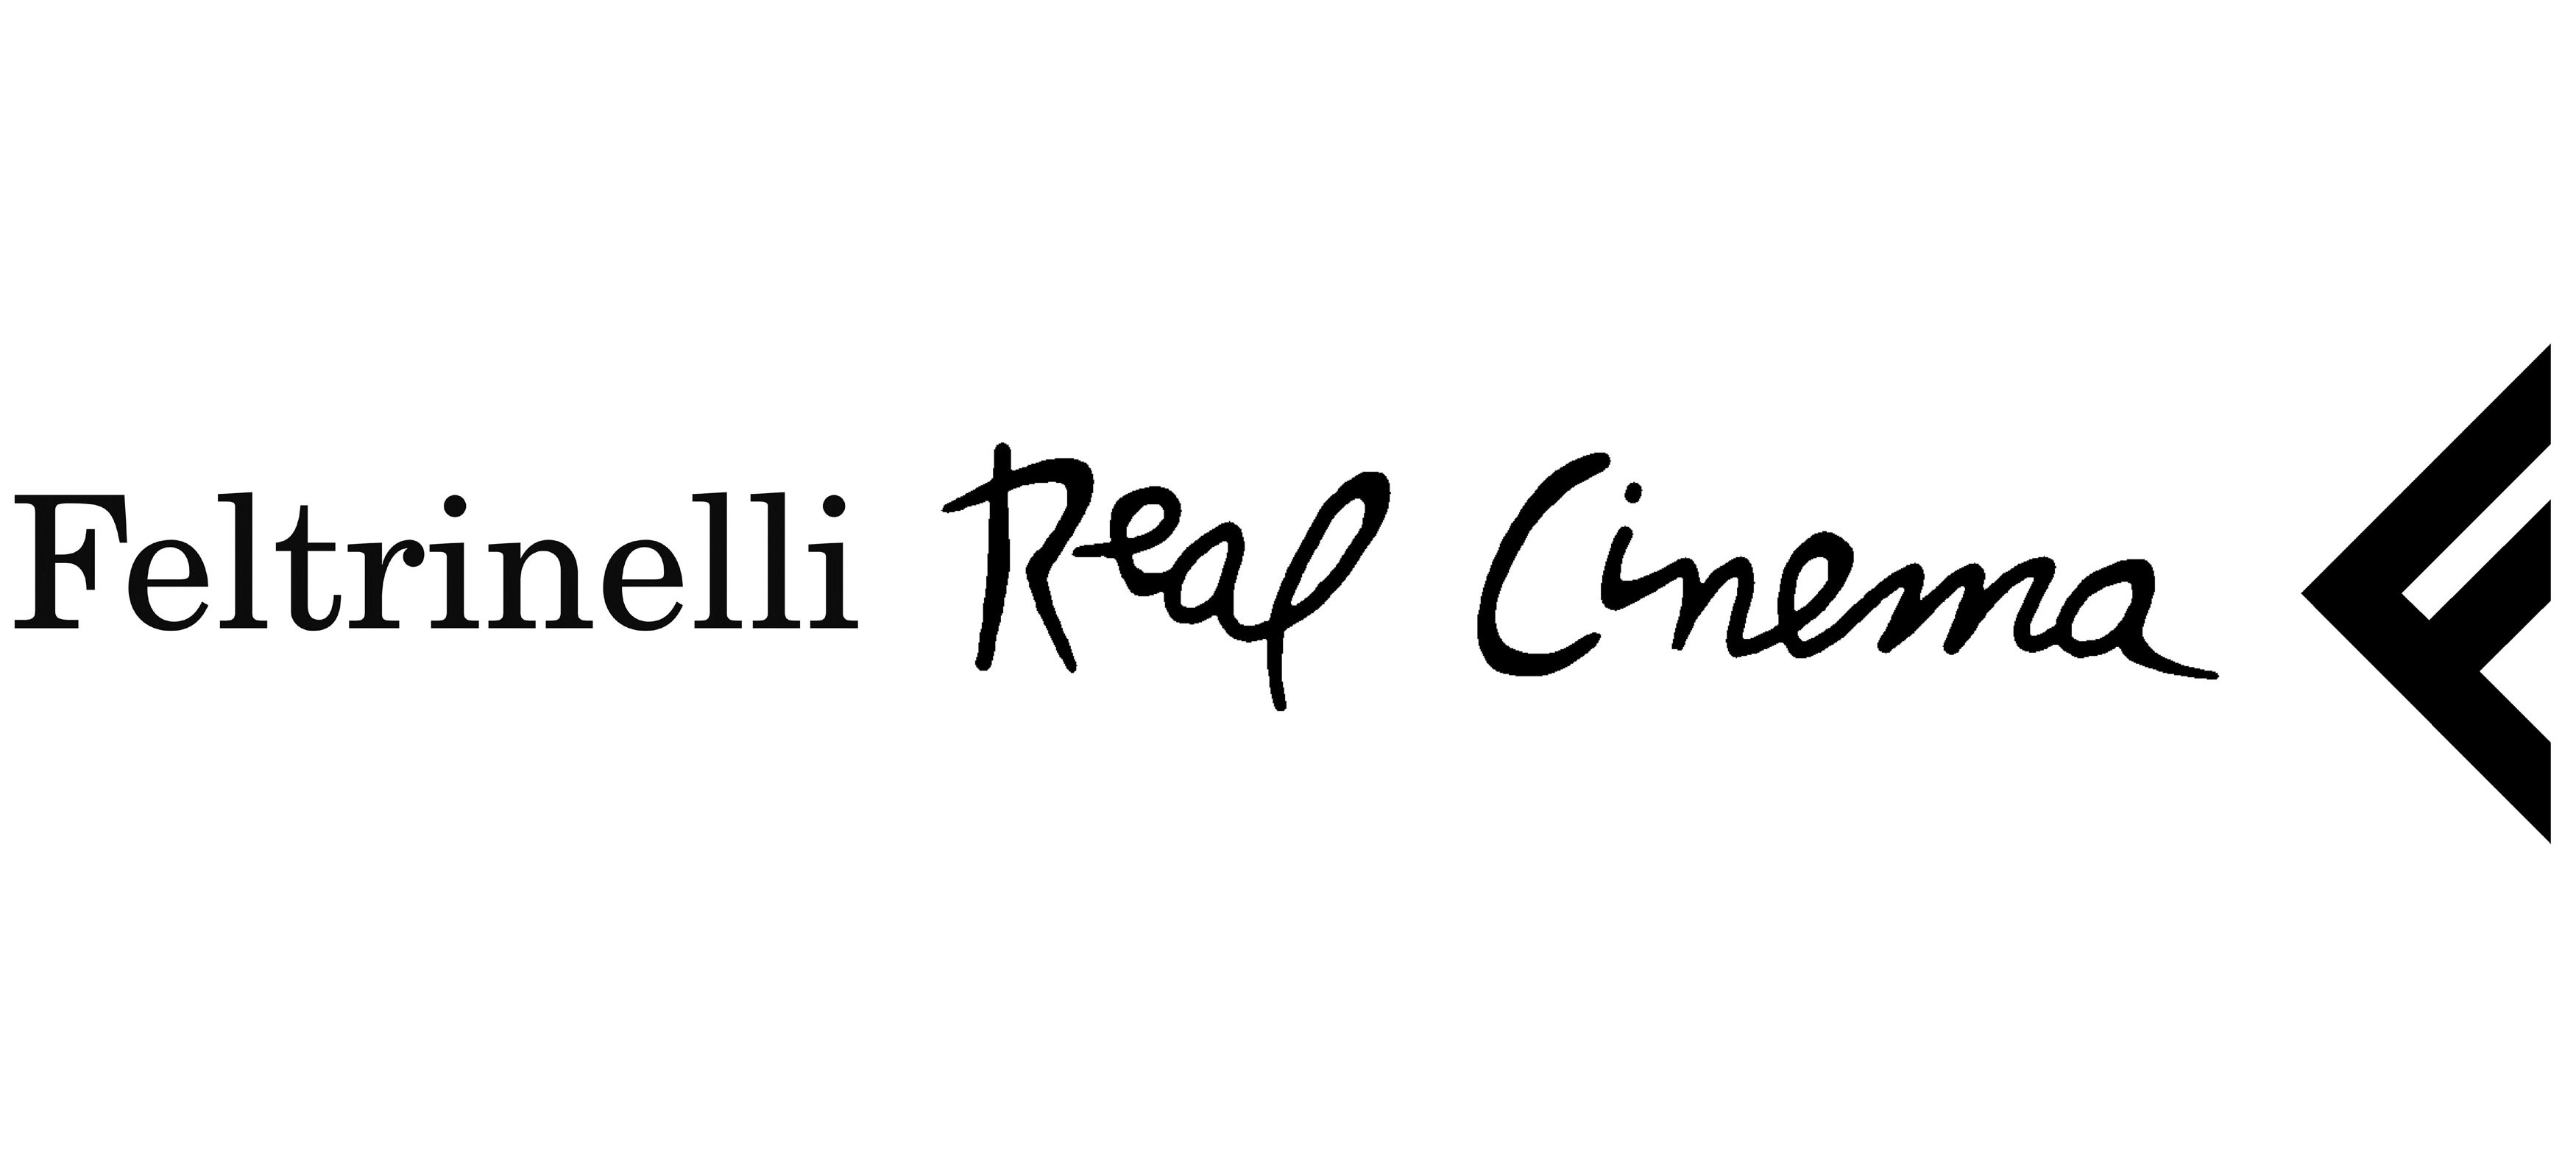 Feltrinelli Real Cinema